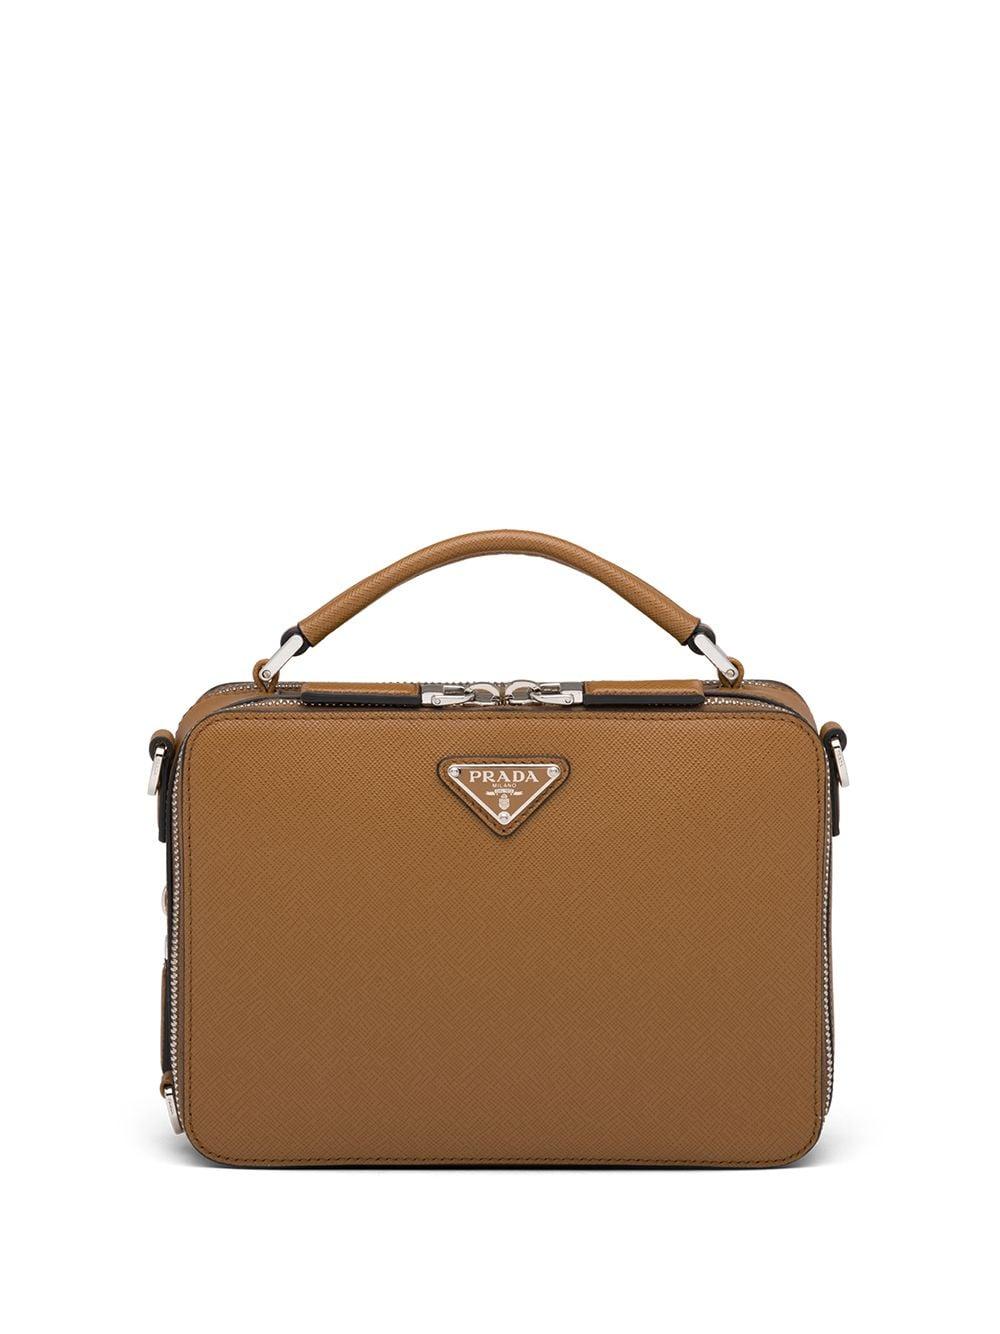 Prada Brique Saffiano Leather Messenger Bag in Brown for Men - Lyst